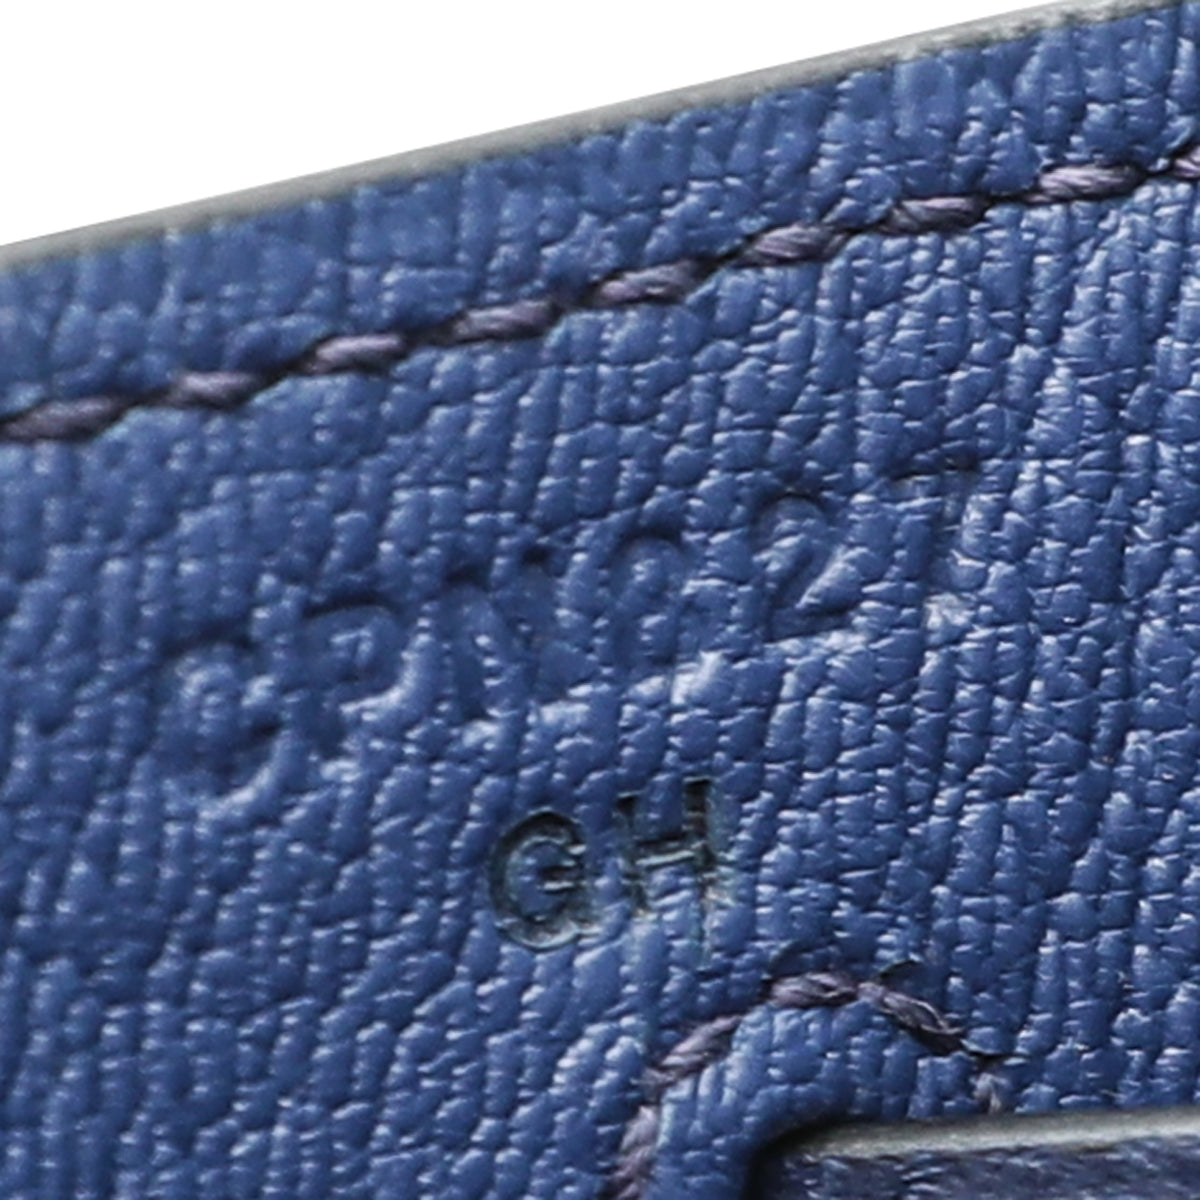 Hermes Bleu Saphir Sellier Kelly 32 Bag